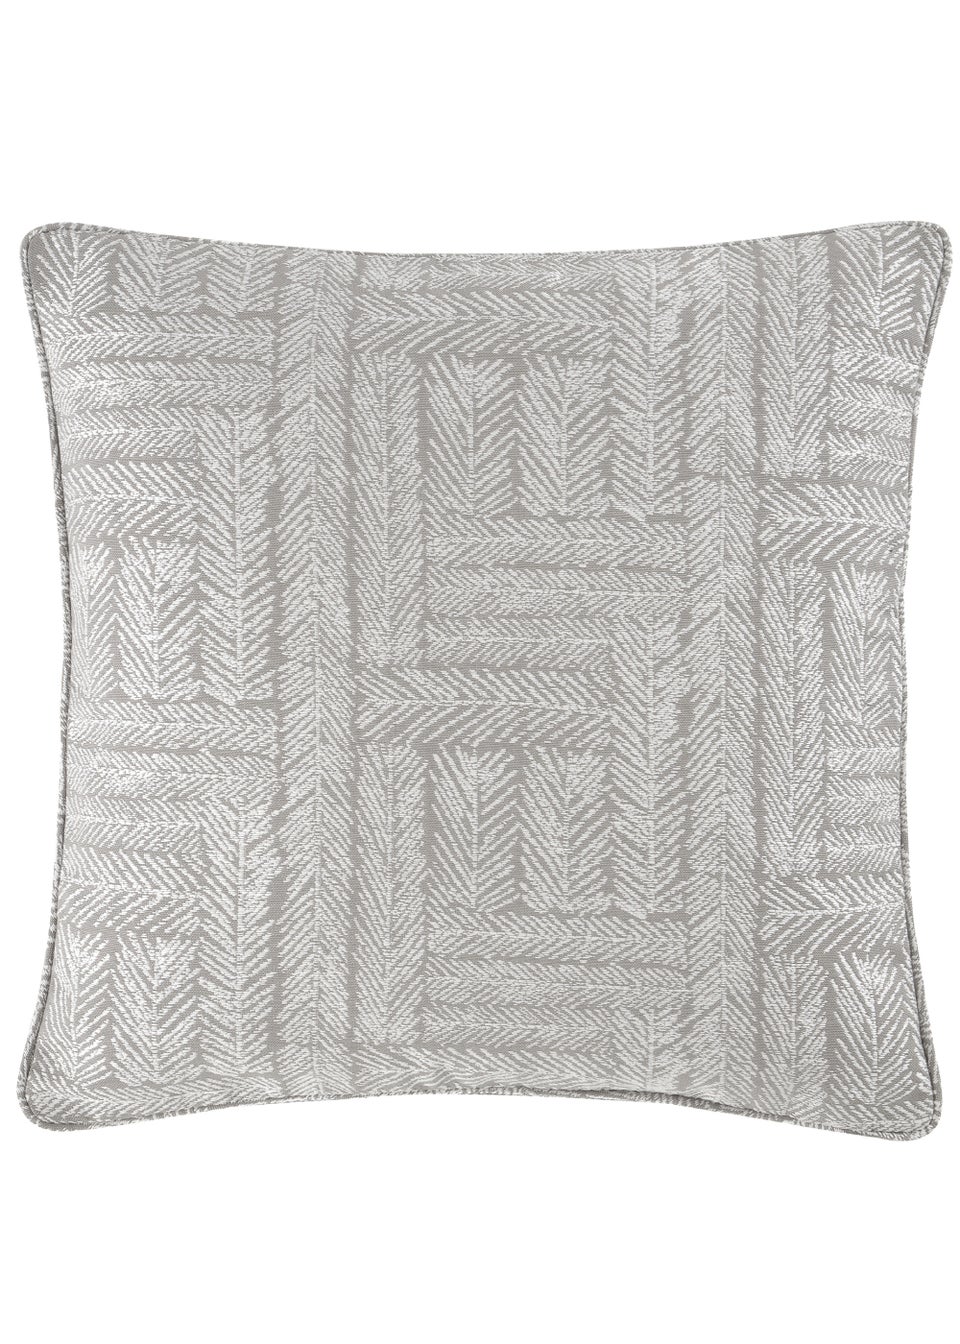 Curtina Lowe Jacquard Grey Filled Cushion (43cm x 43cm)